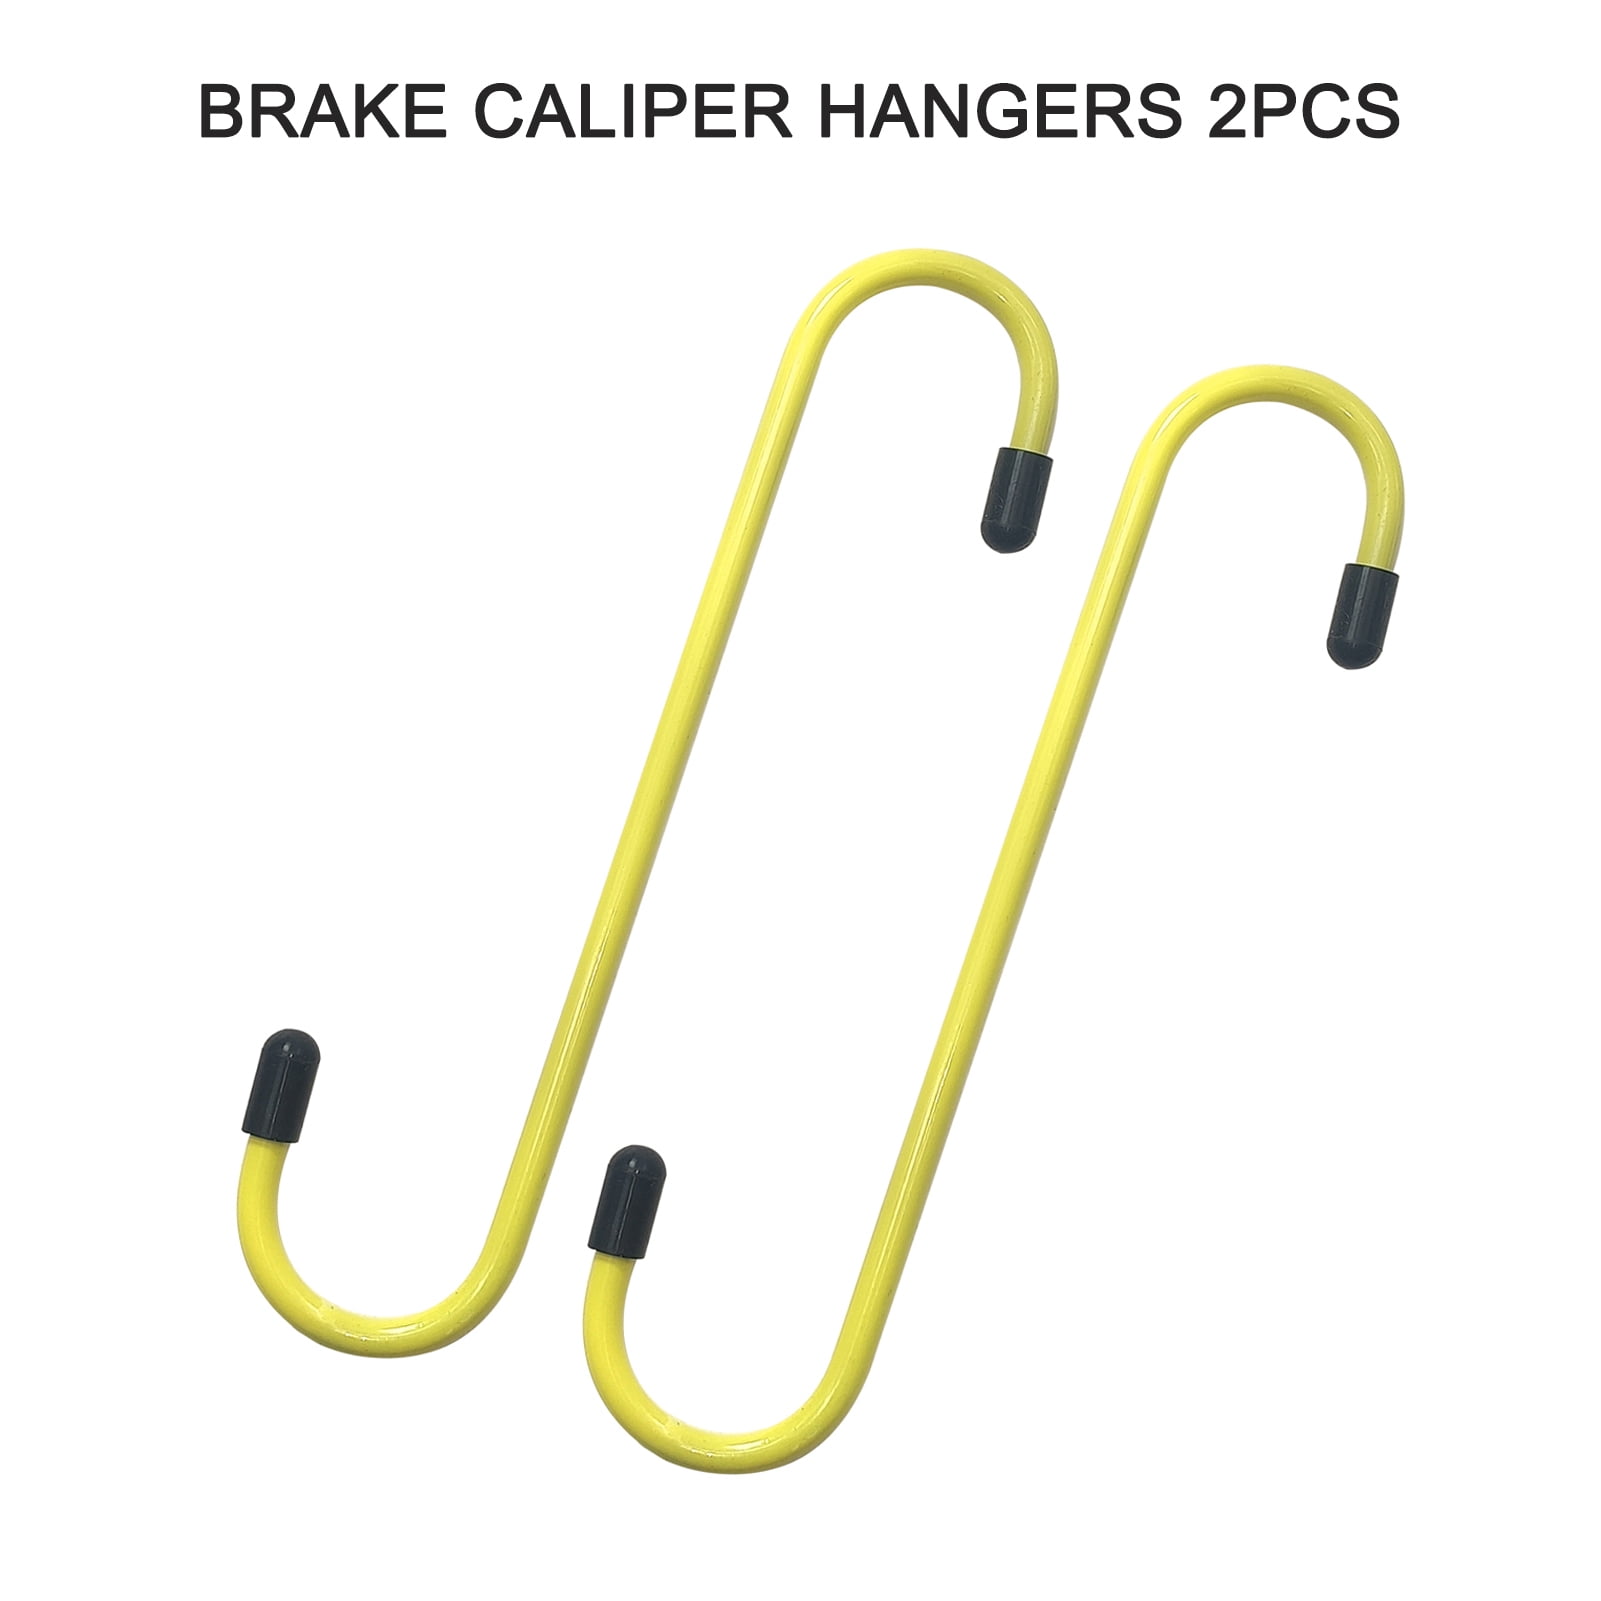 3 Pieces Brake Caliper Hangers Brake Caliper Hook with Rubber Tips 